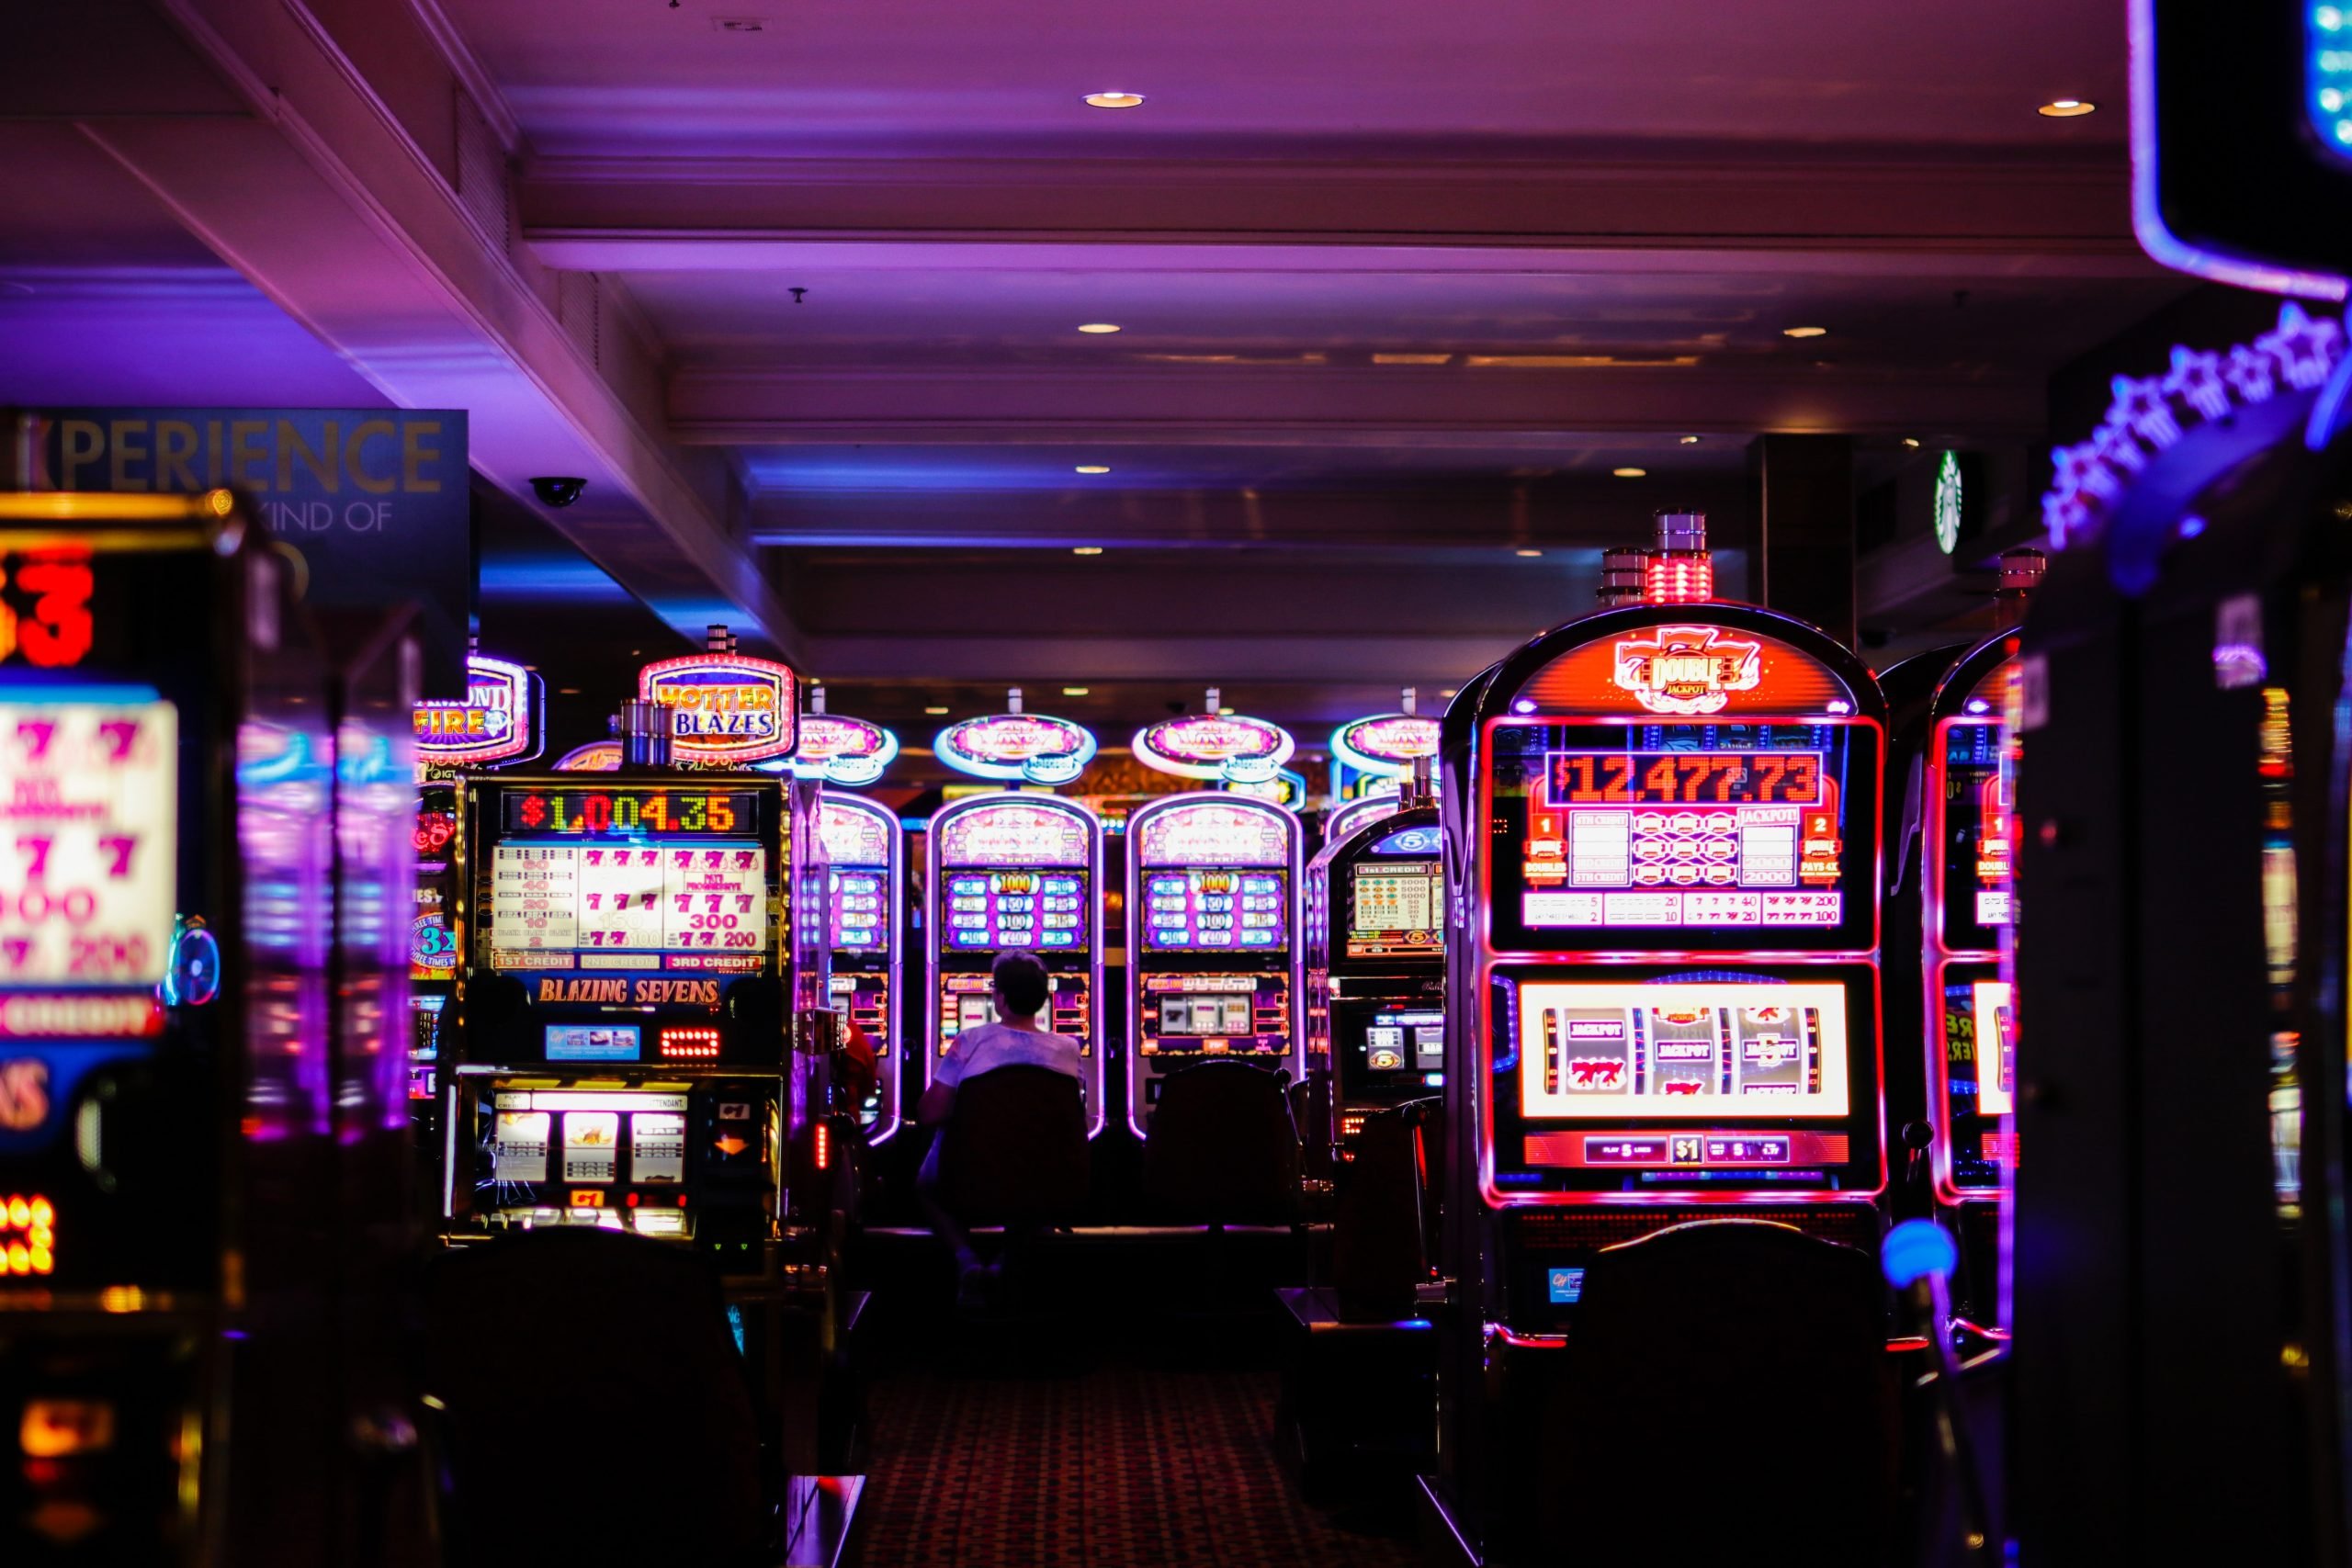 slot machines casinos near me